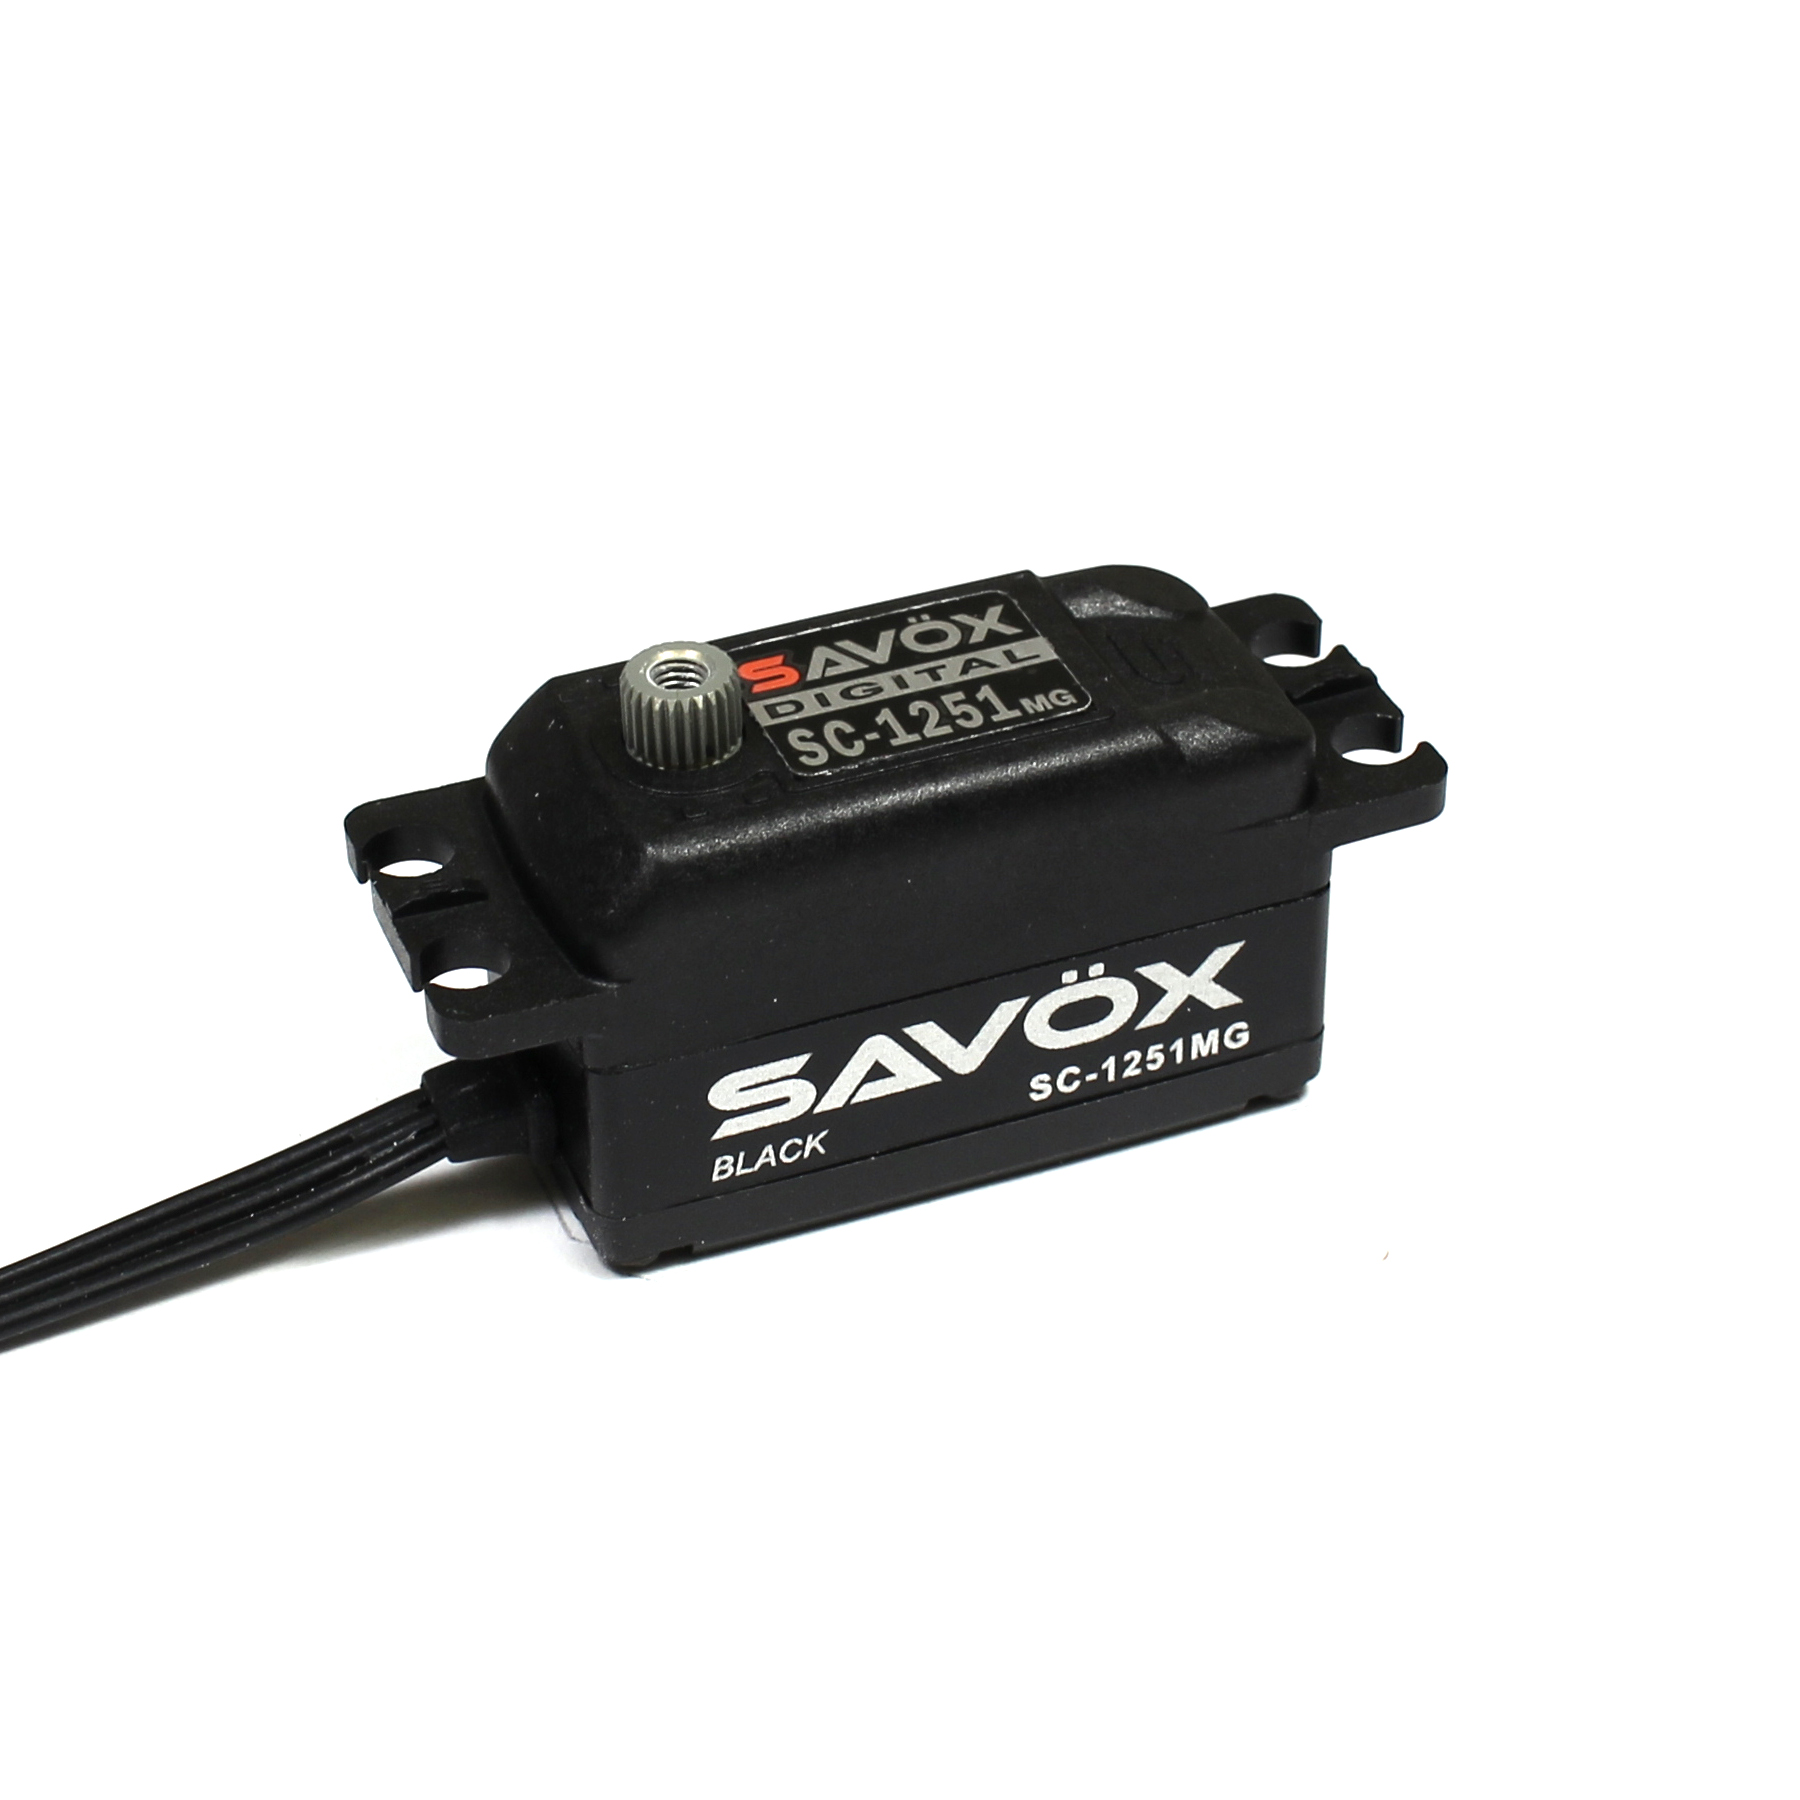 Savox Black Edition Low Profile Digital Servo